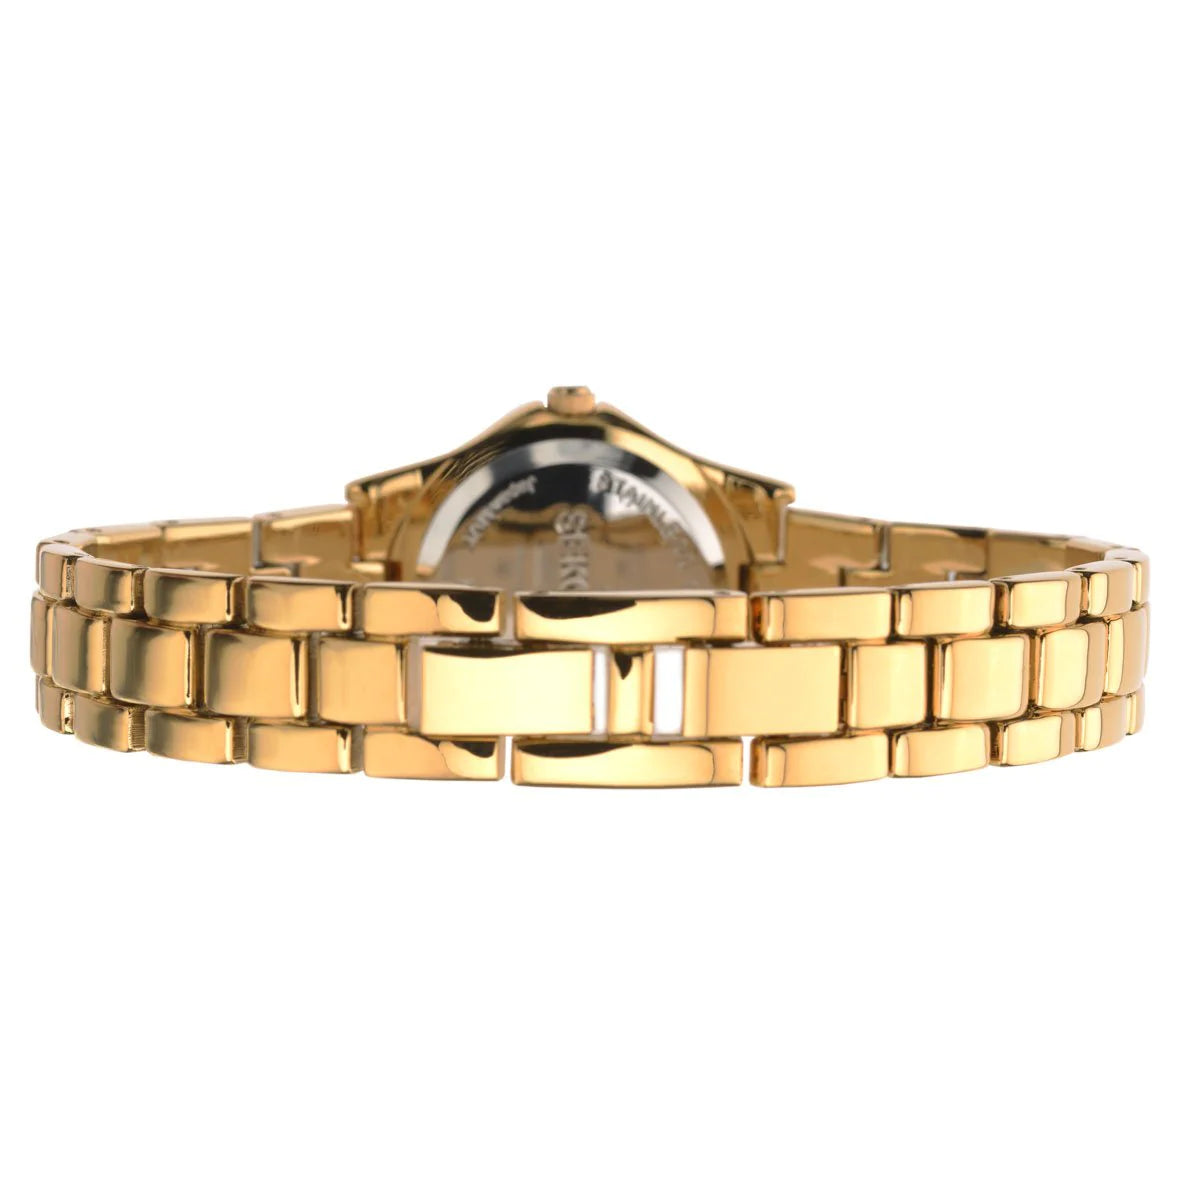 Sekonda Ladies Gold Dial Gold Stones Set Gold Bracelet Watch #24615